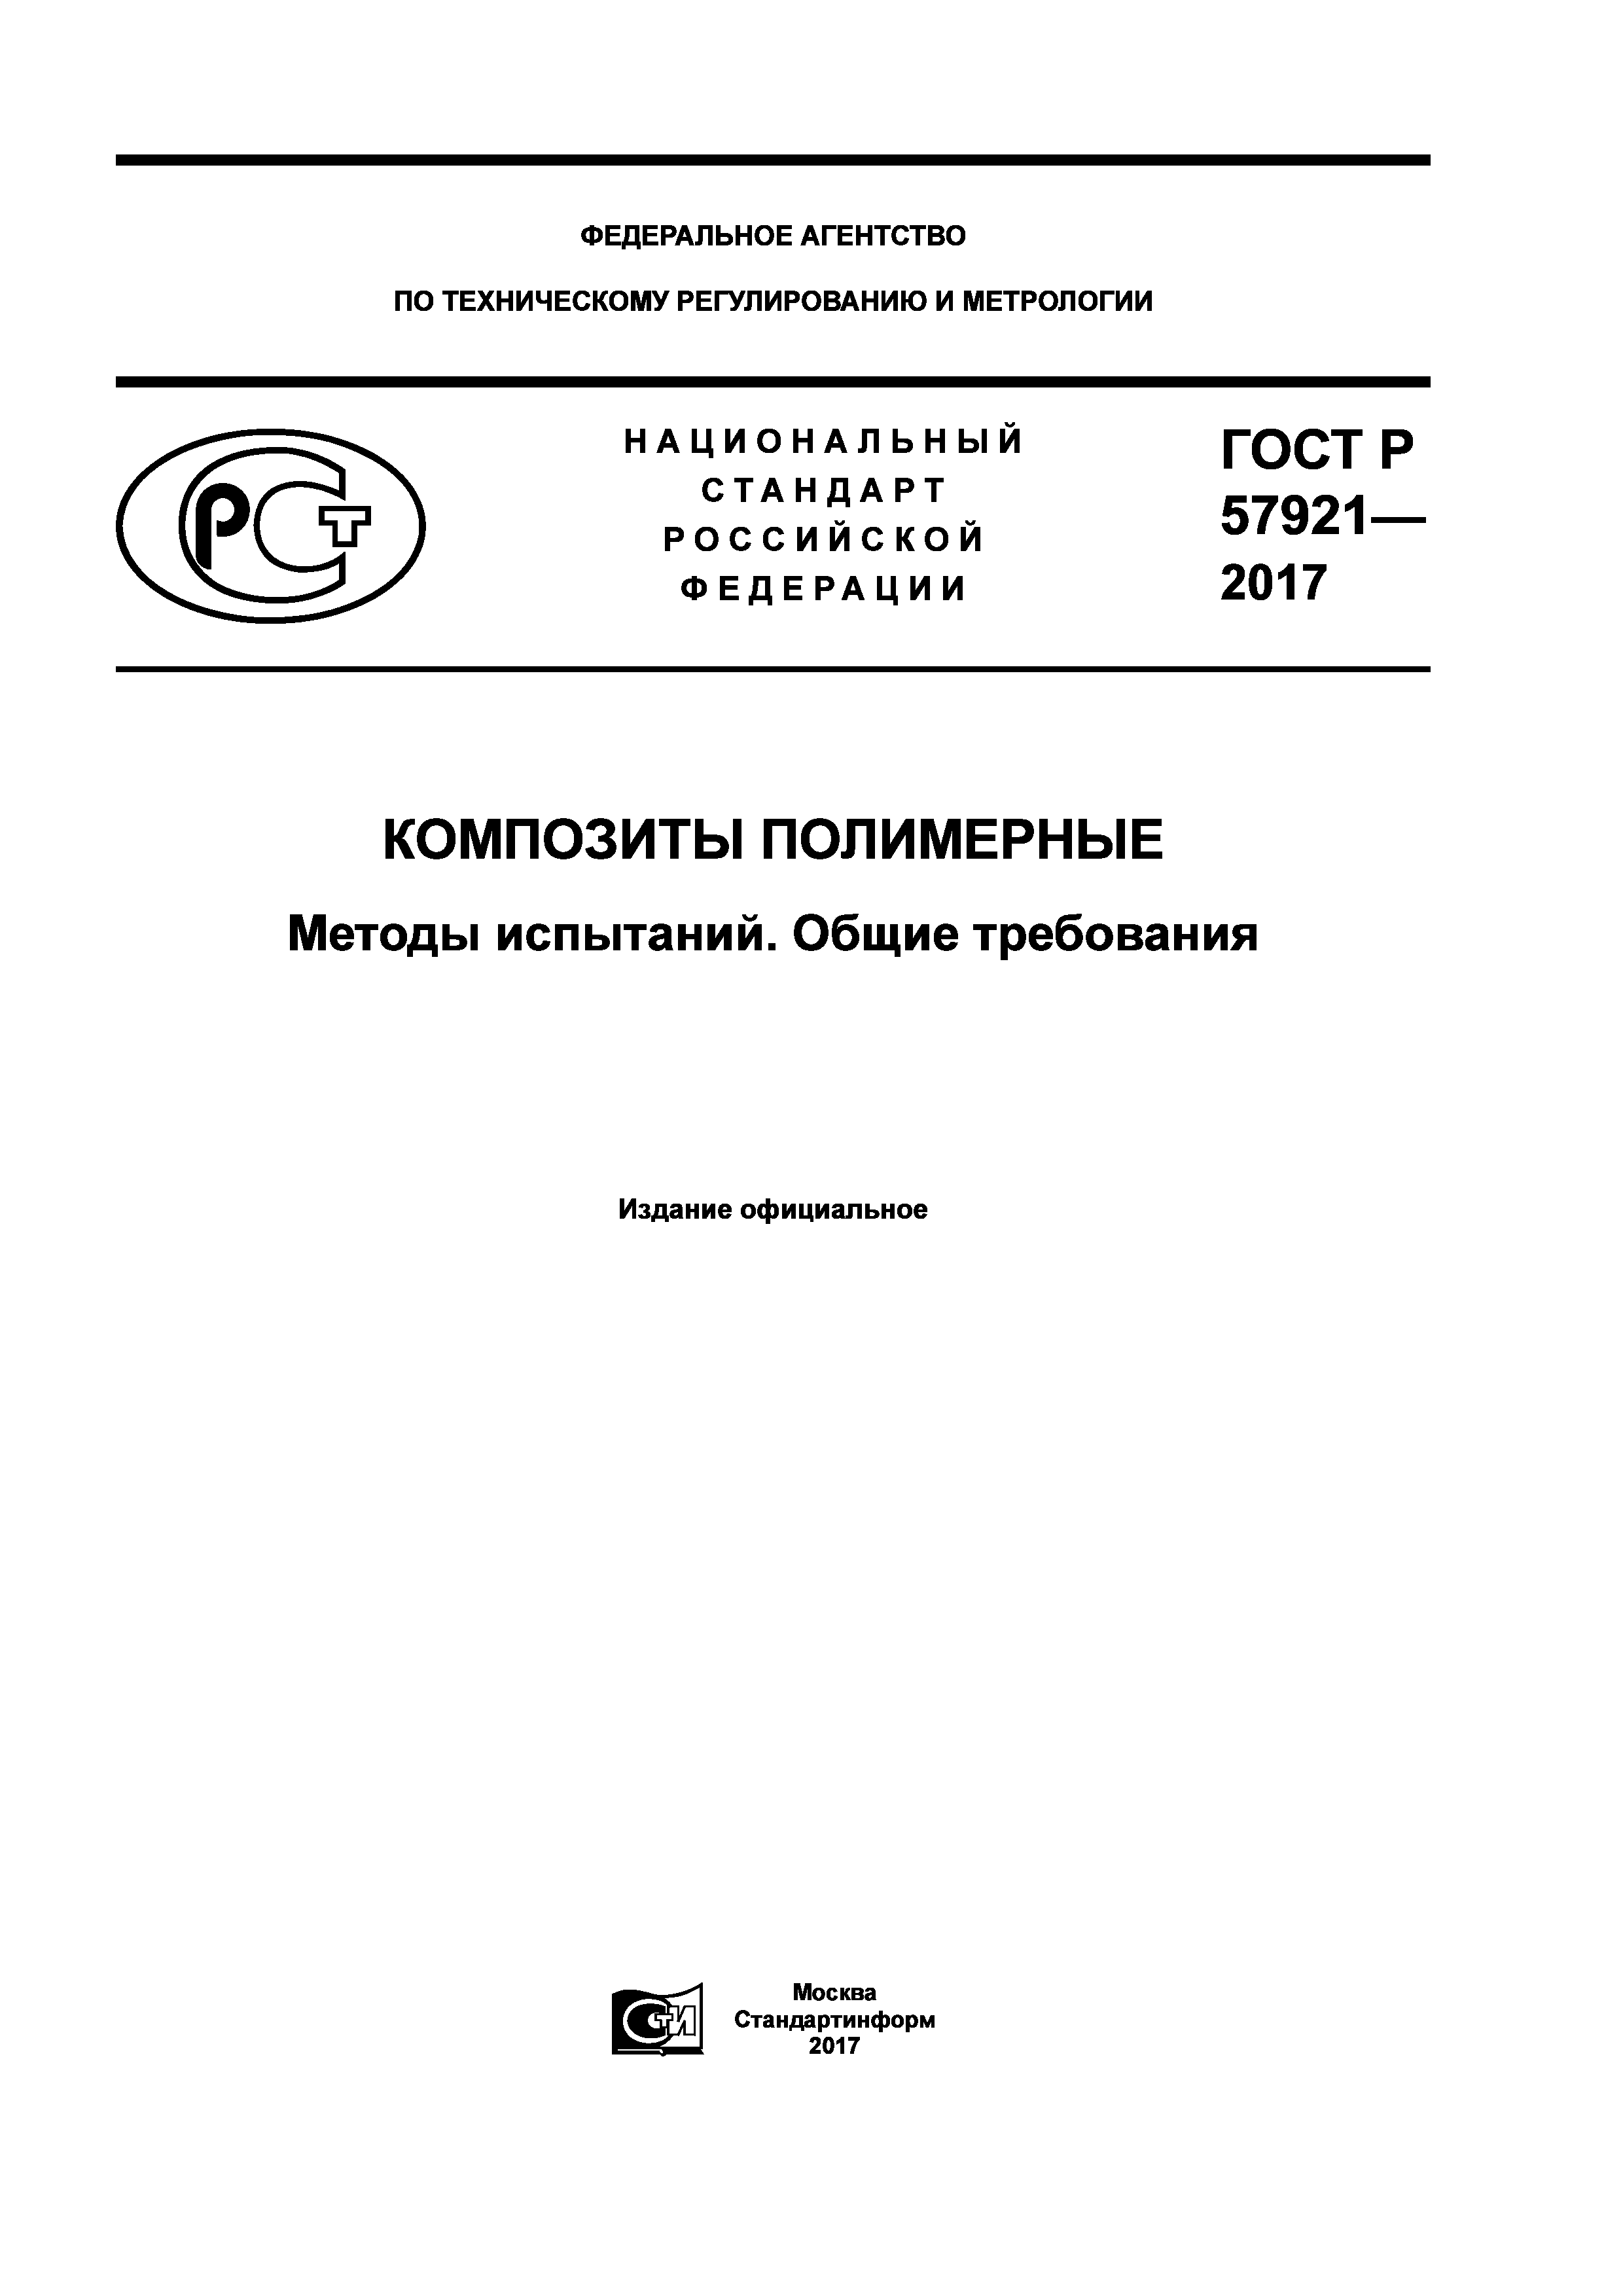 ГОСТ Р 57921-2017